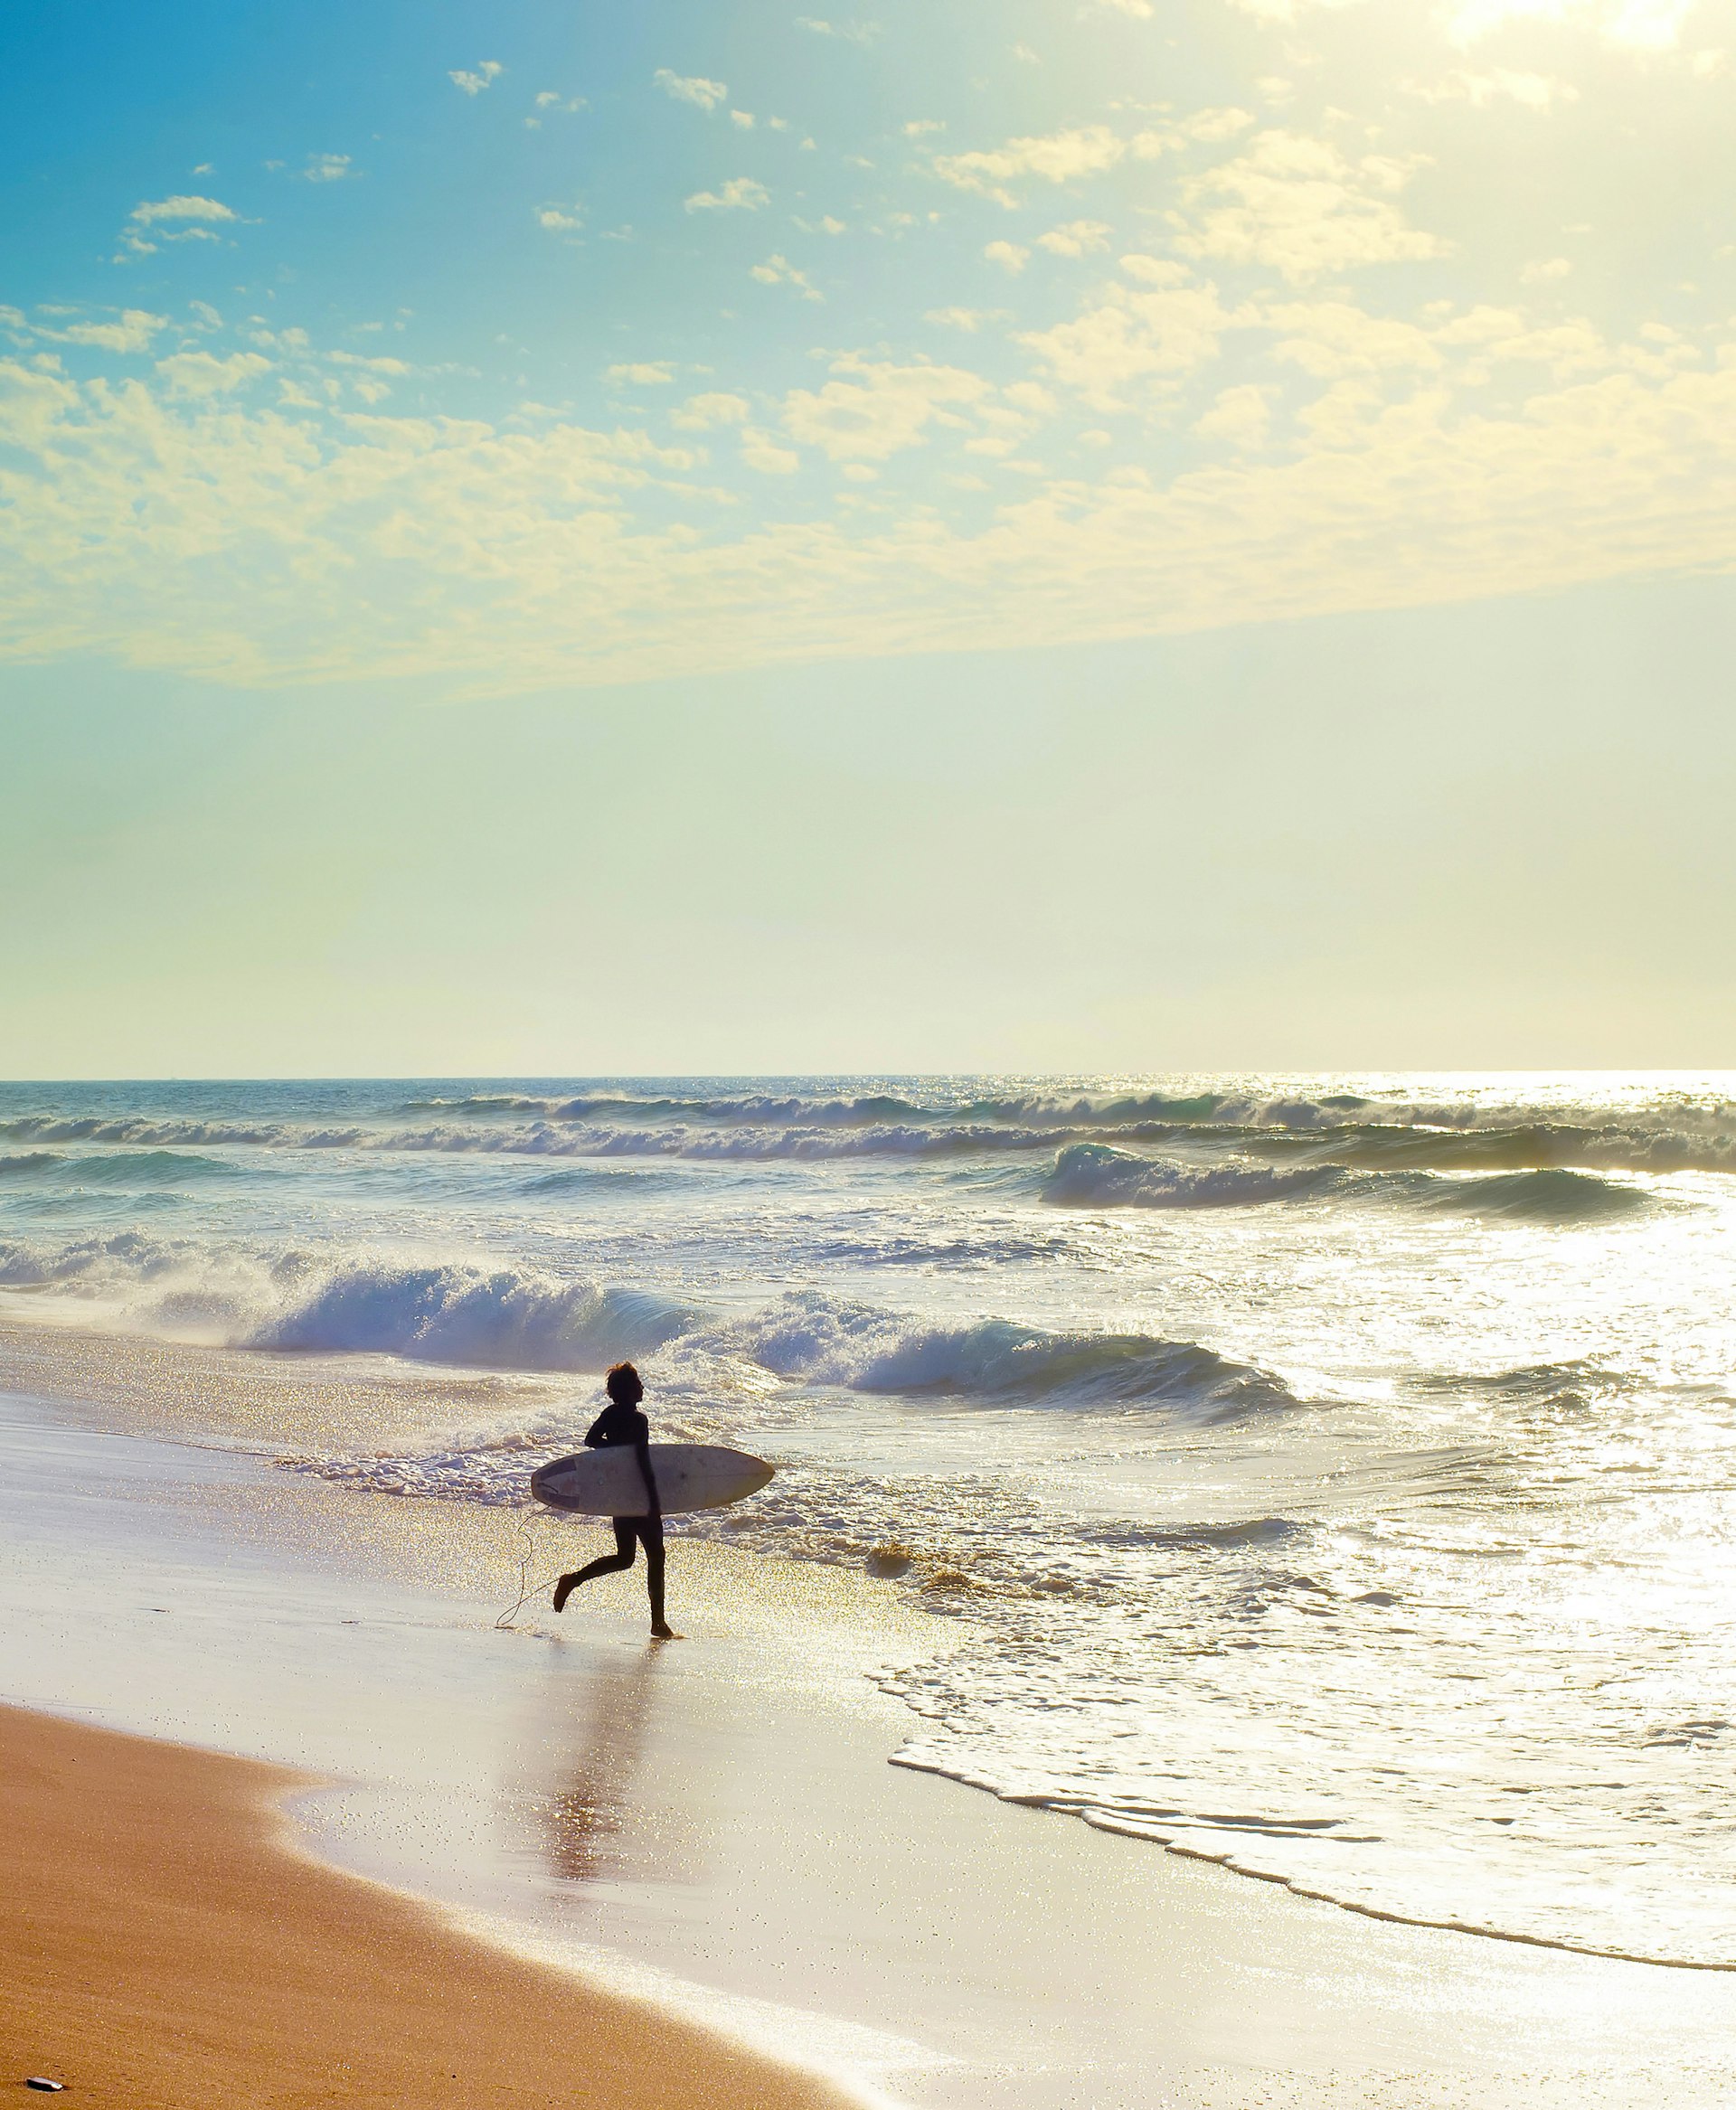 A surfer walks down the beach towards the sea in the blazing sunshine